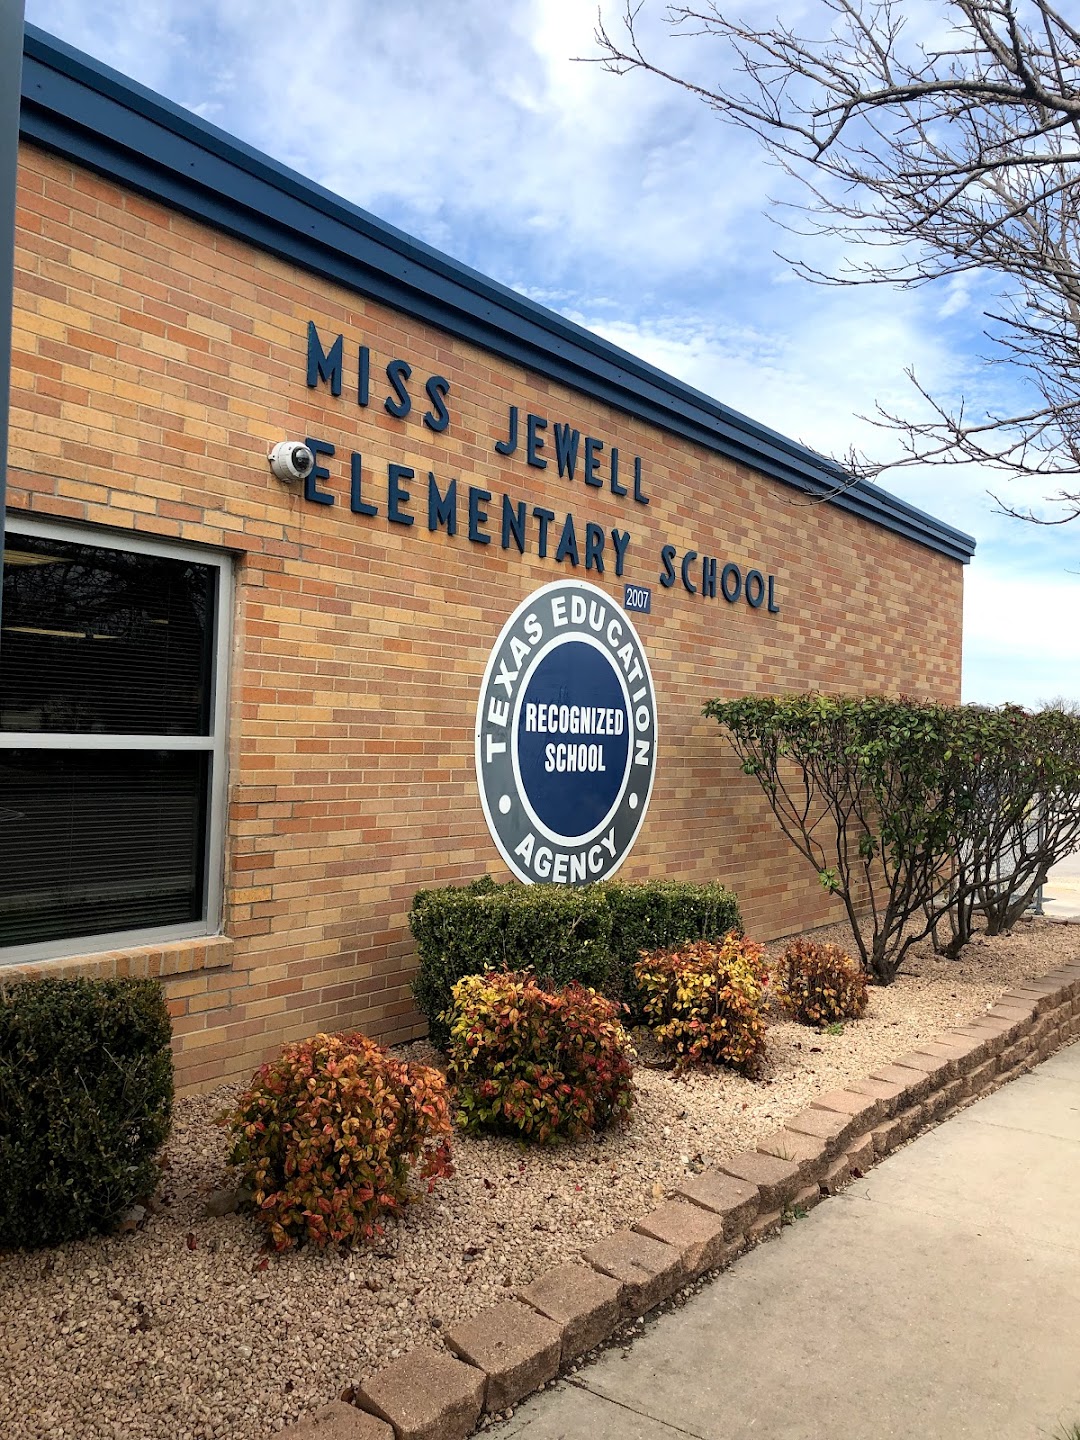 Miss Jewell Elementary School